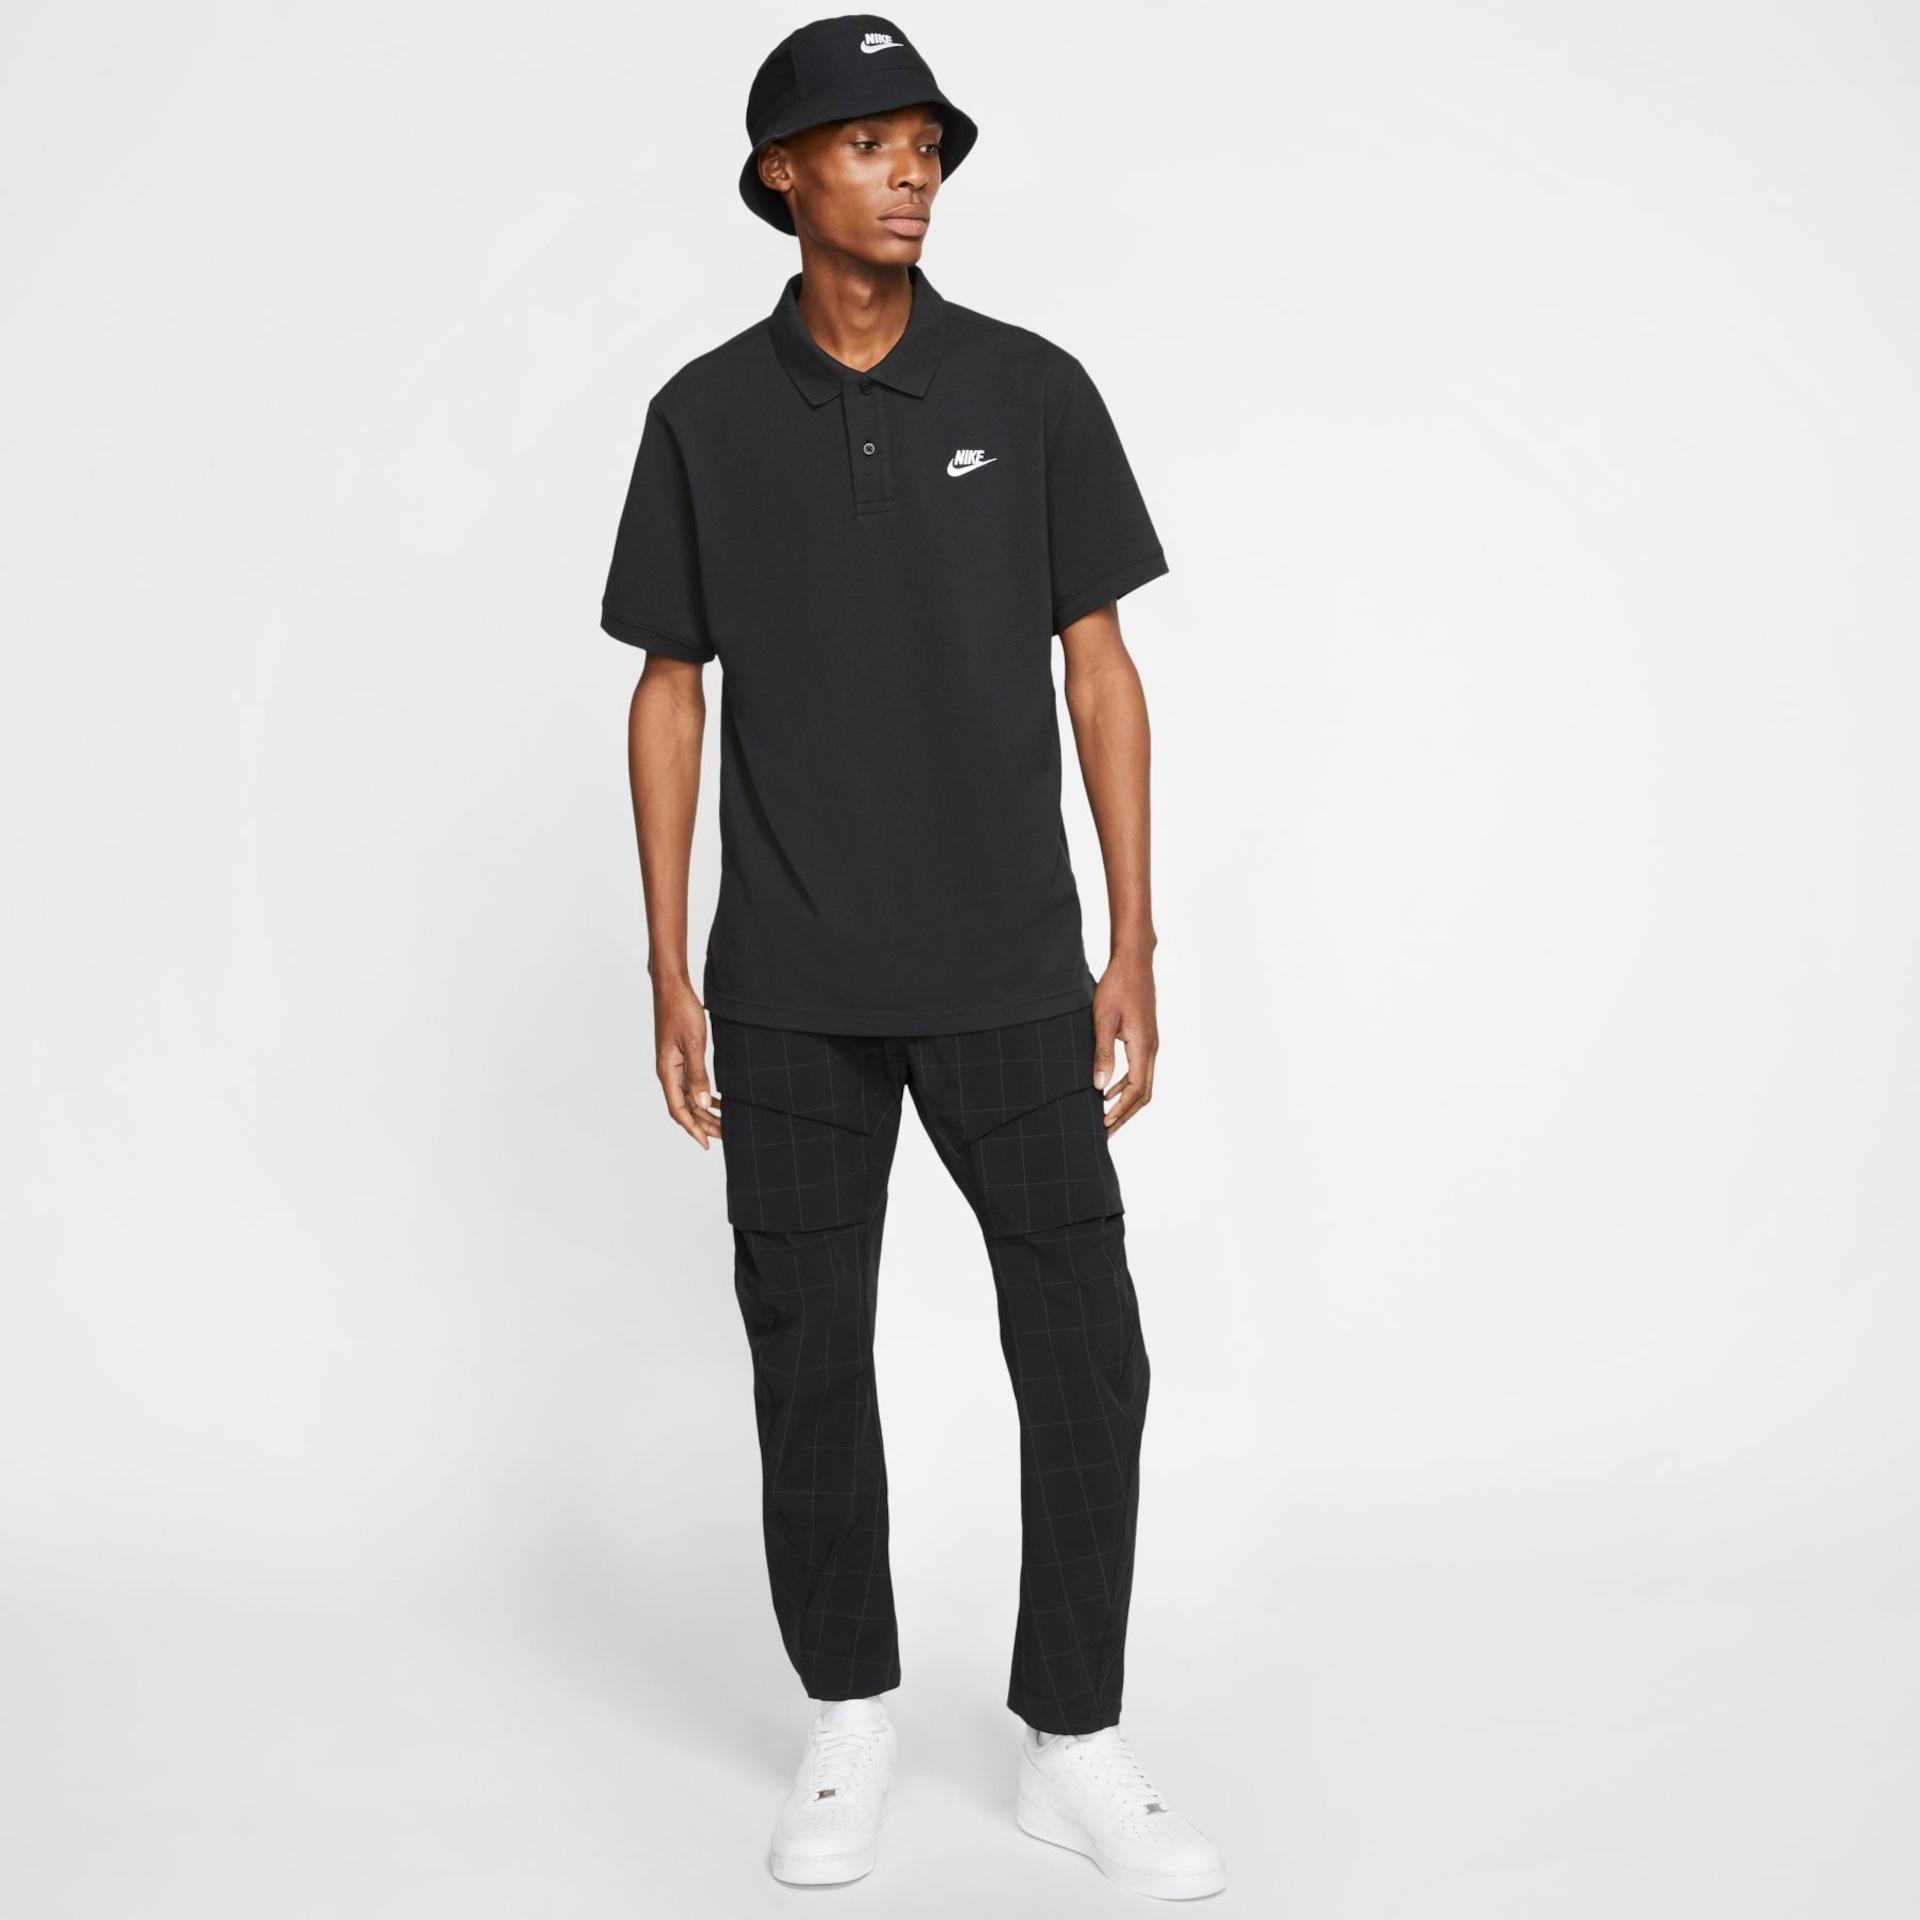 Camiseta Nike Sportswear Polo Masculina - Foto 5